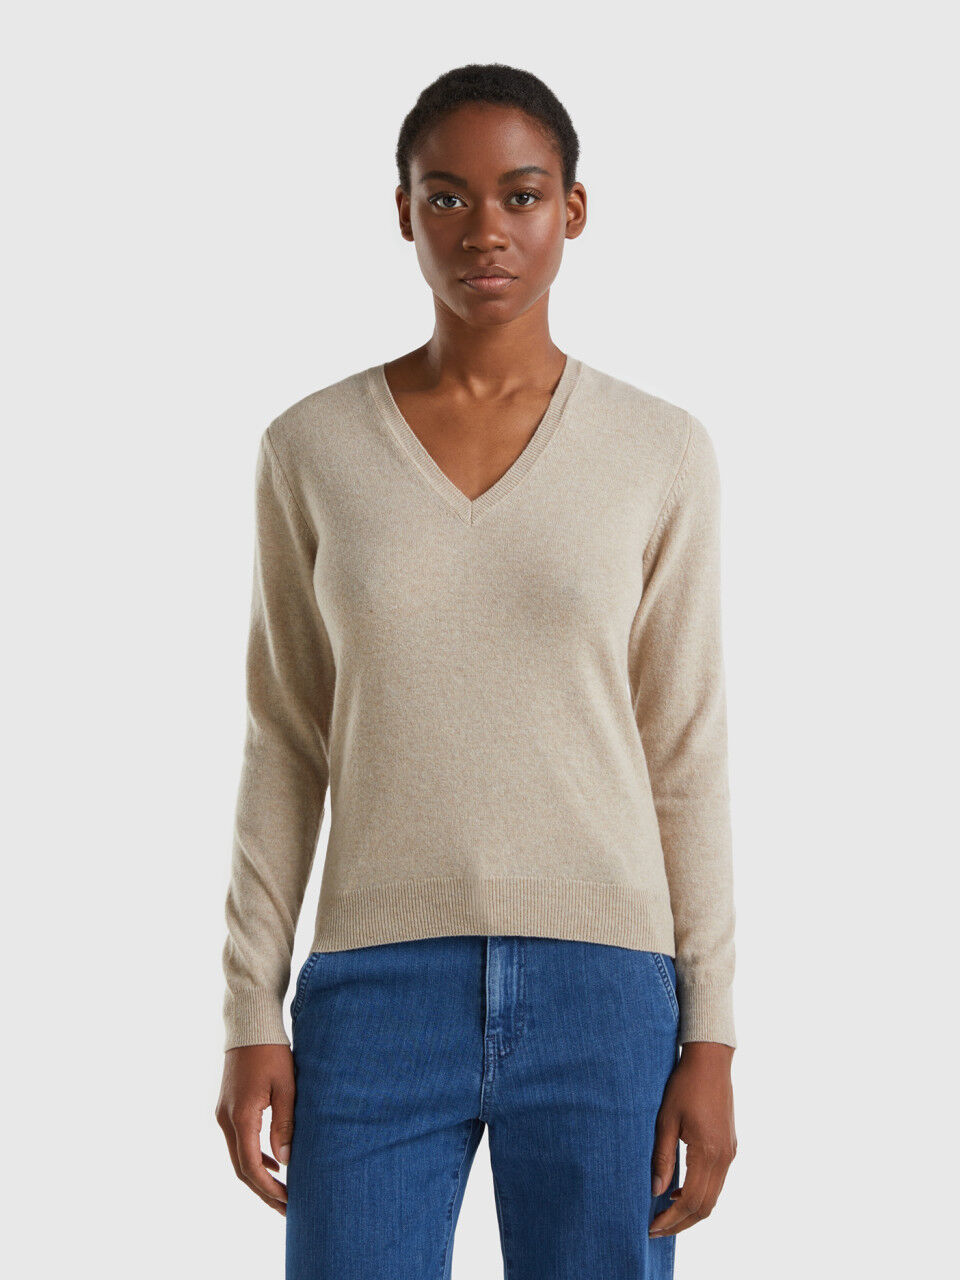 Beige V-neck sweater in pure Merino wool